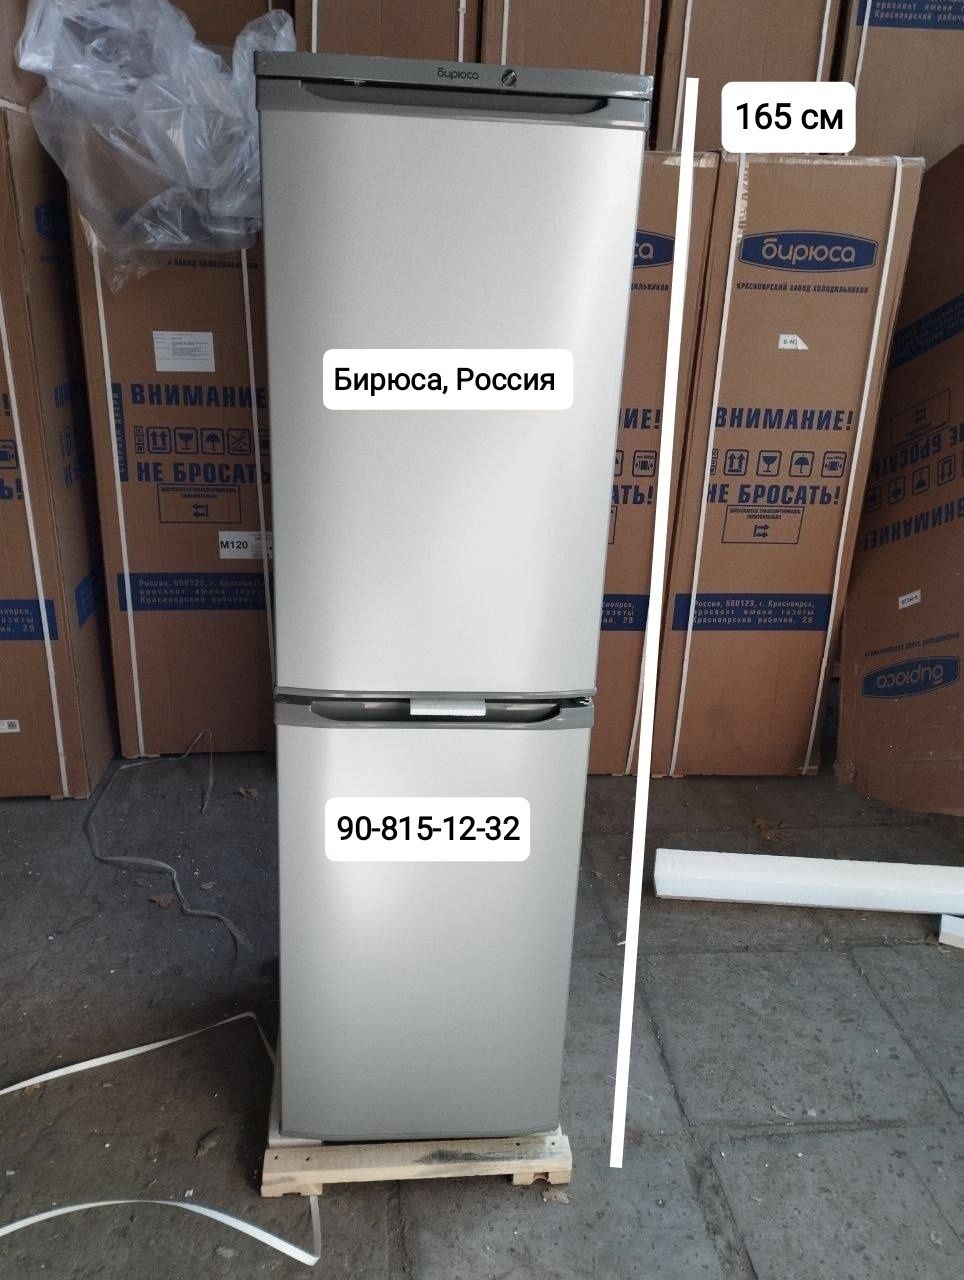 Со Склада! Акция! Холодильник, Holod Бирюса Россия (165 см) + доставка